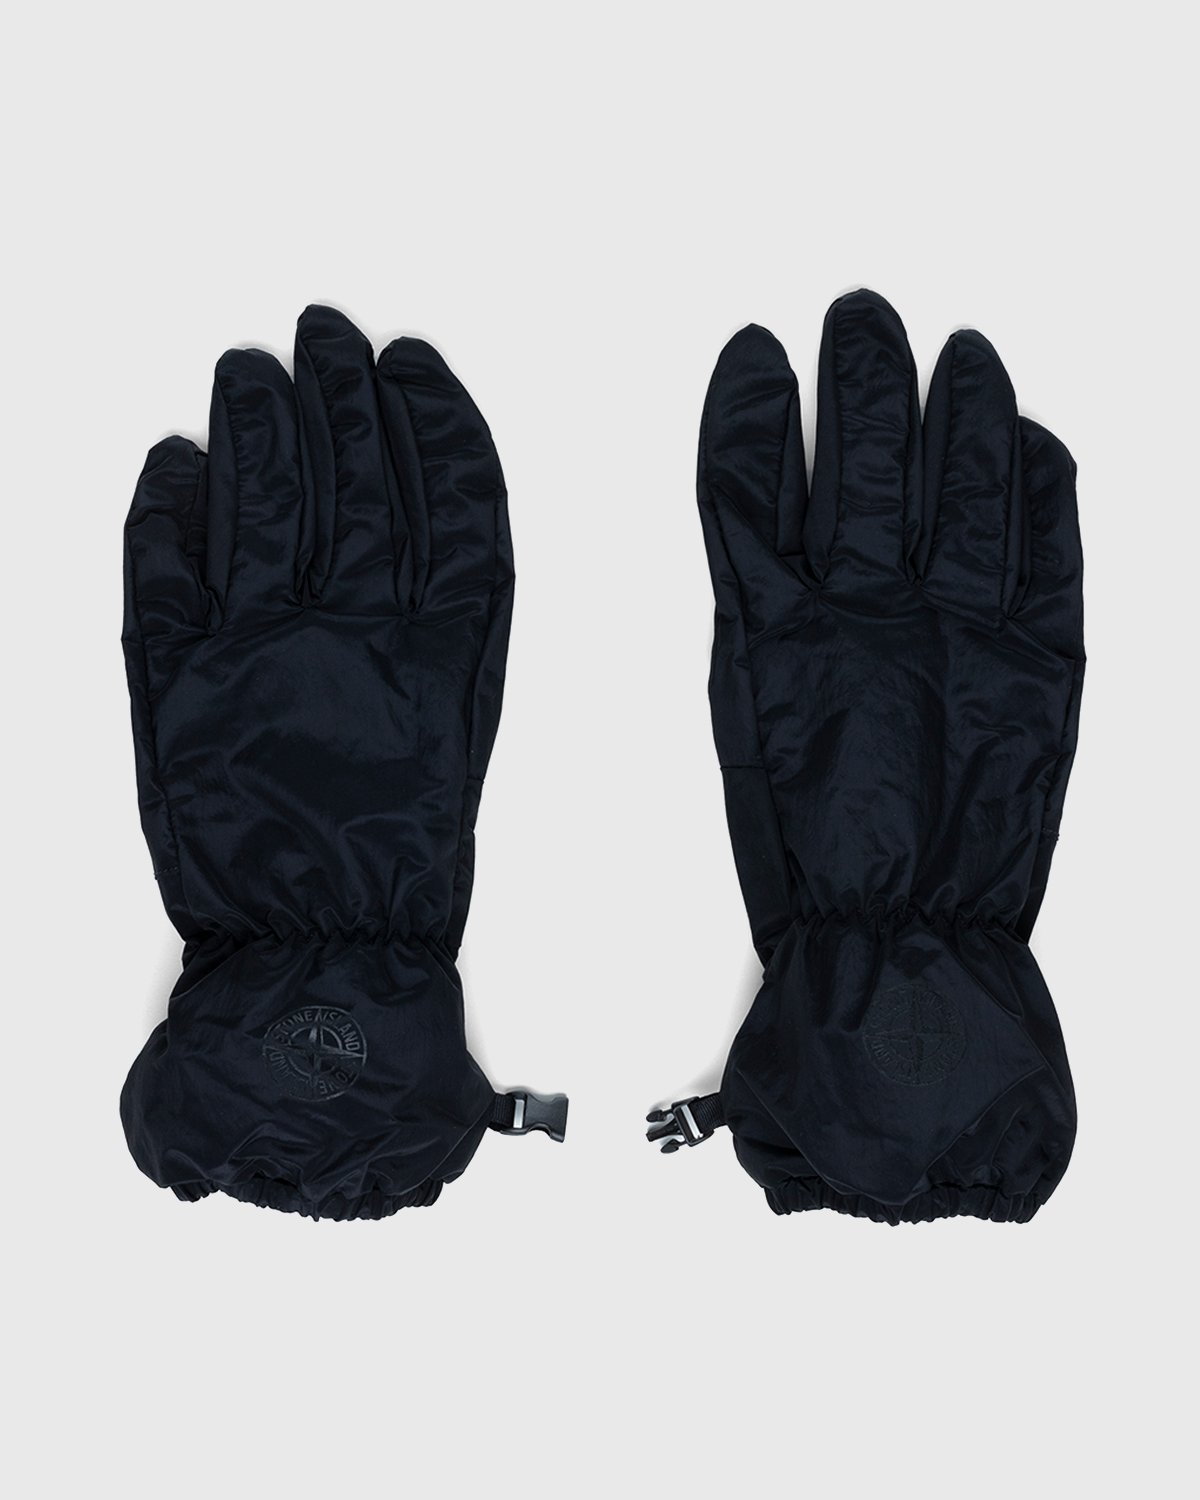 Stone Island - Gloves Black - Accessories - Black - Image 1